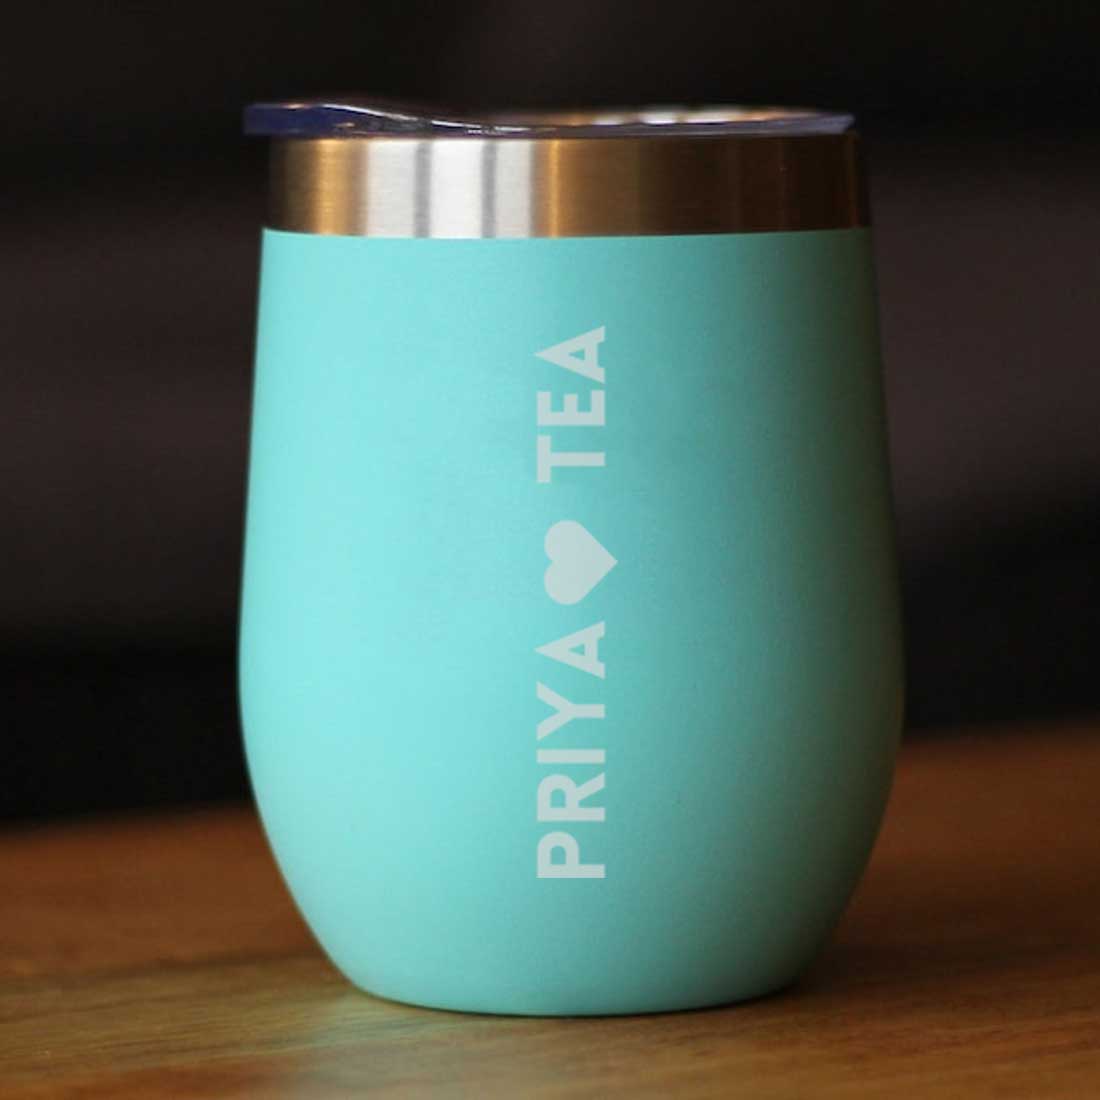 Personalised Coffee Mug With Lid Engraved Stainless Steel Travel Mug Cup (350 ML) - Tea Lover